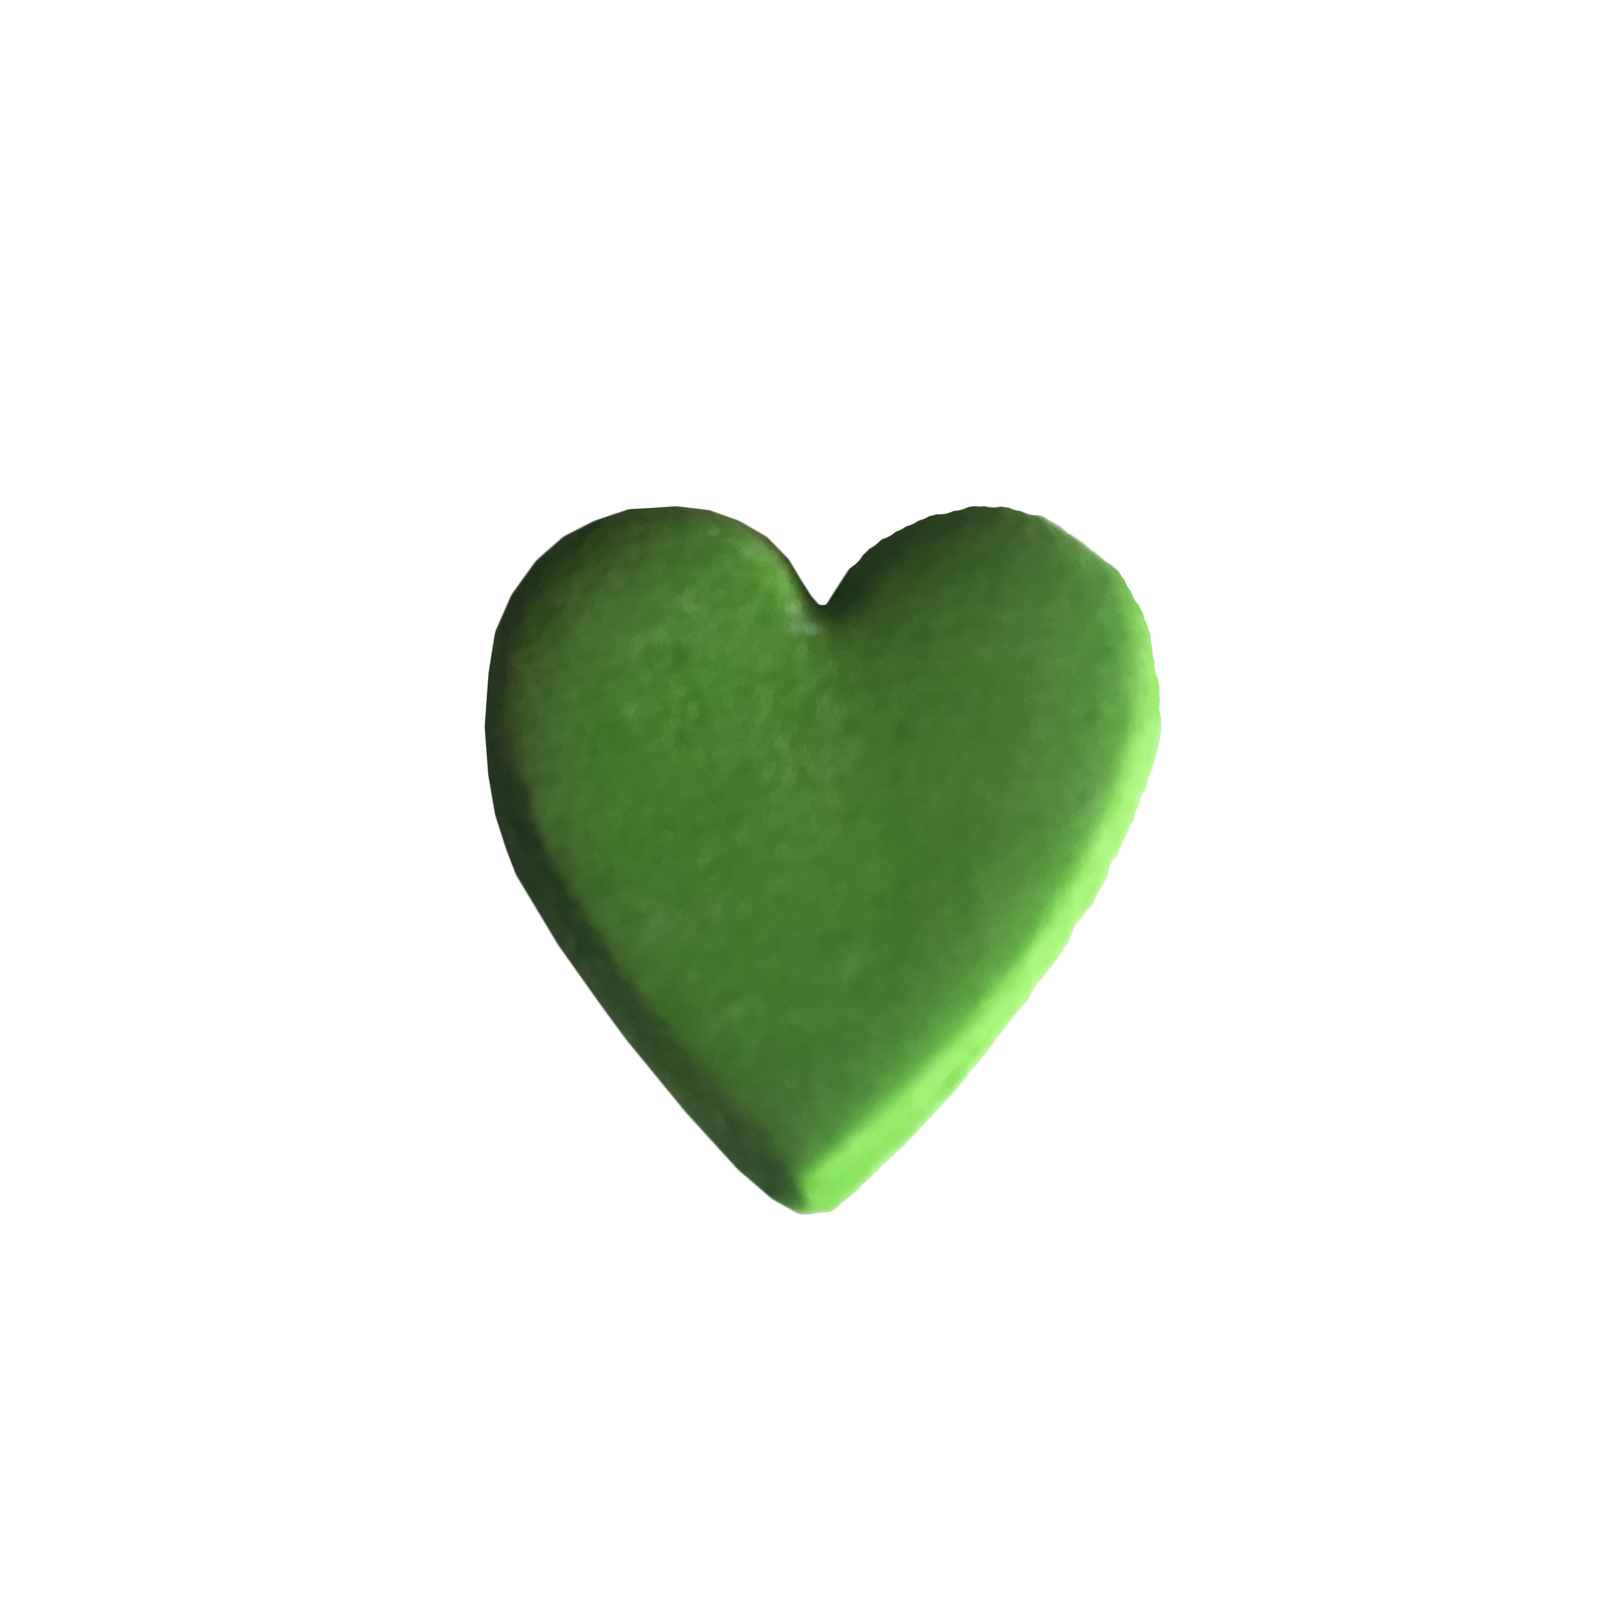 Kitchen Domain - Gumpaste Hearts Small Green